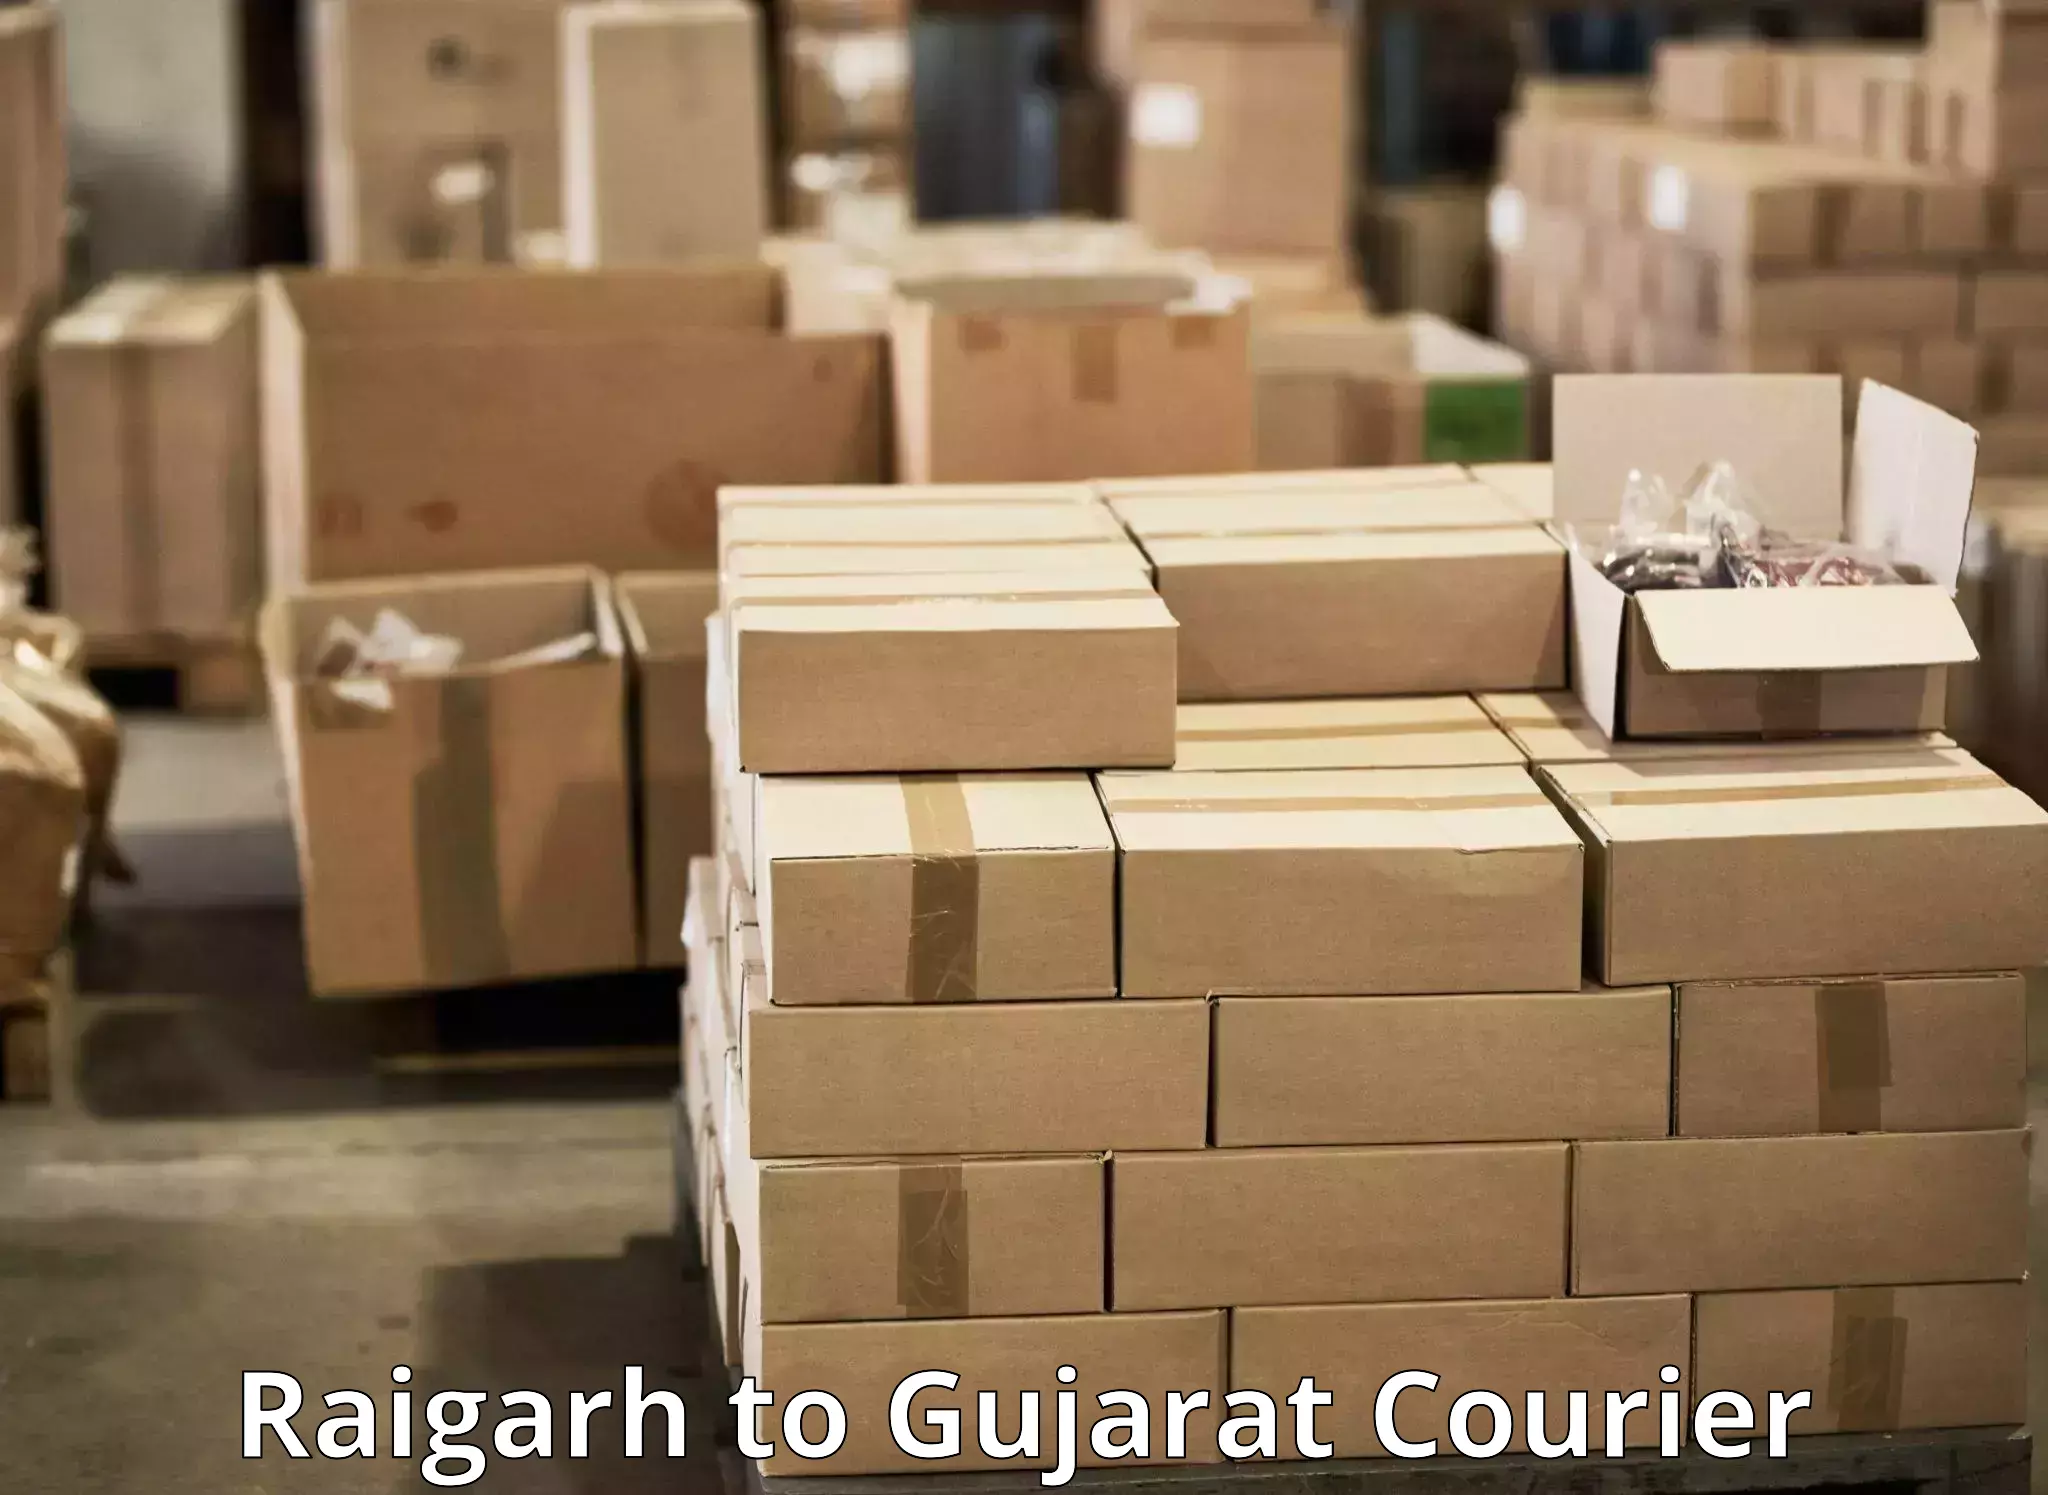 Courier services Raigarh to GIDC